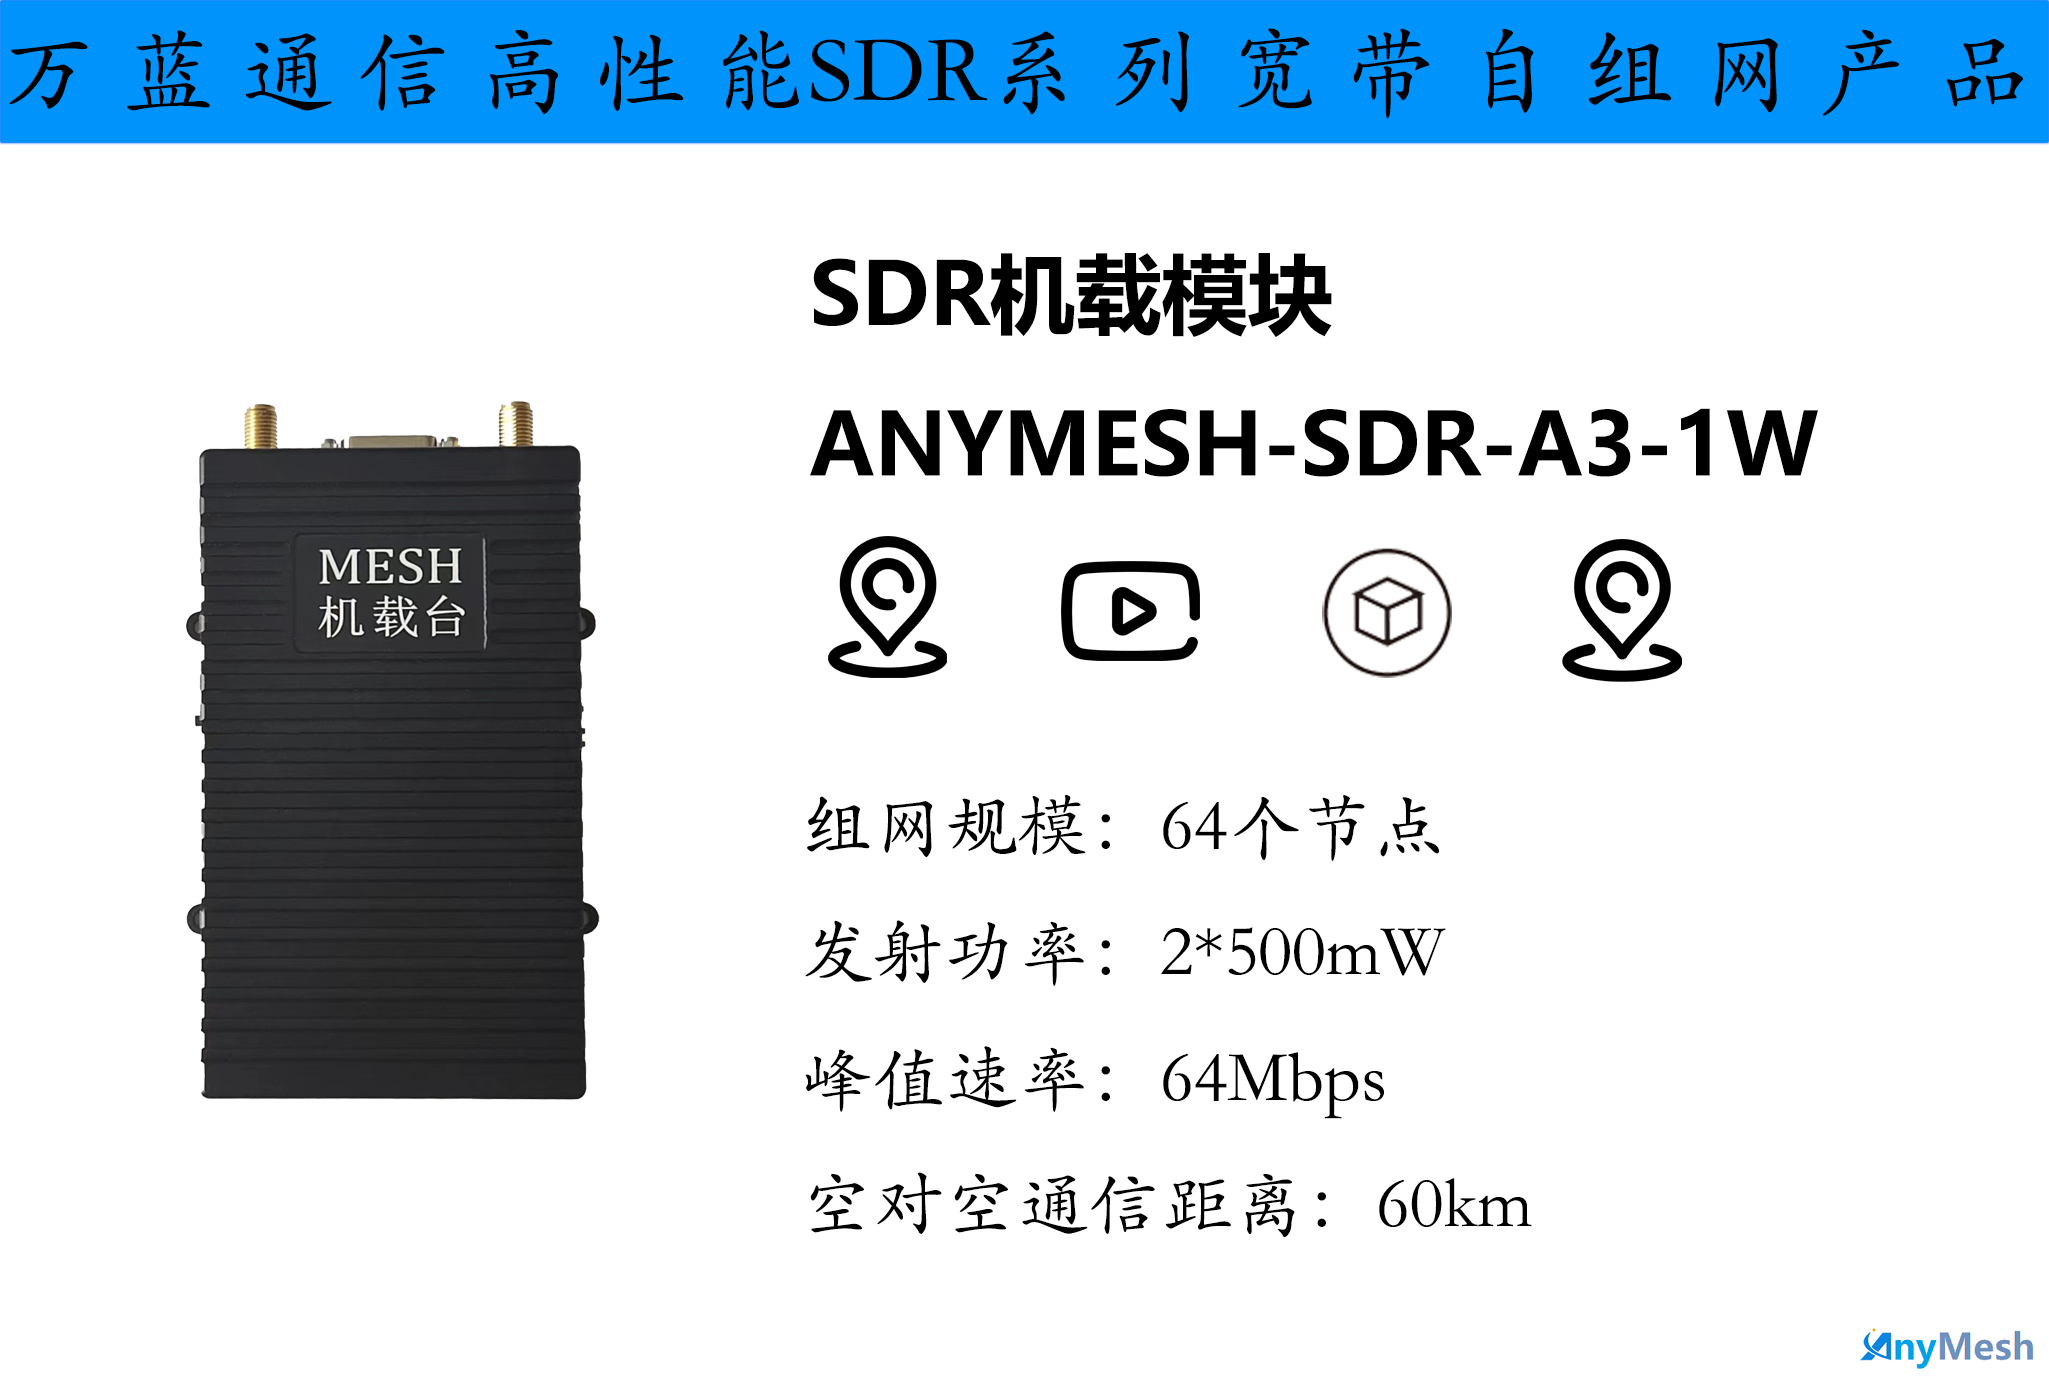 ANYMESH-SDR-A3-1W 机载型航空自组网电台 机载